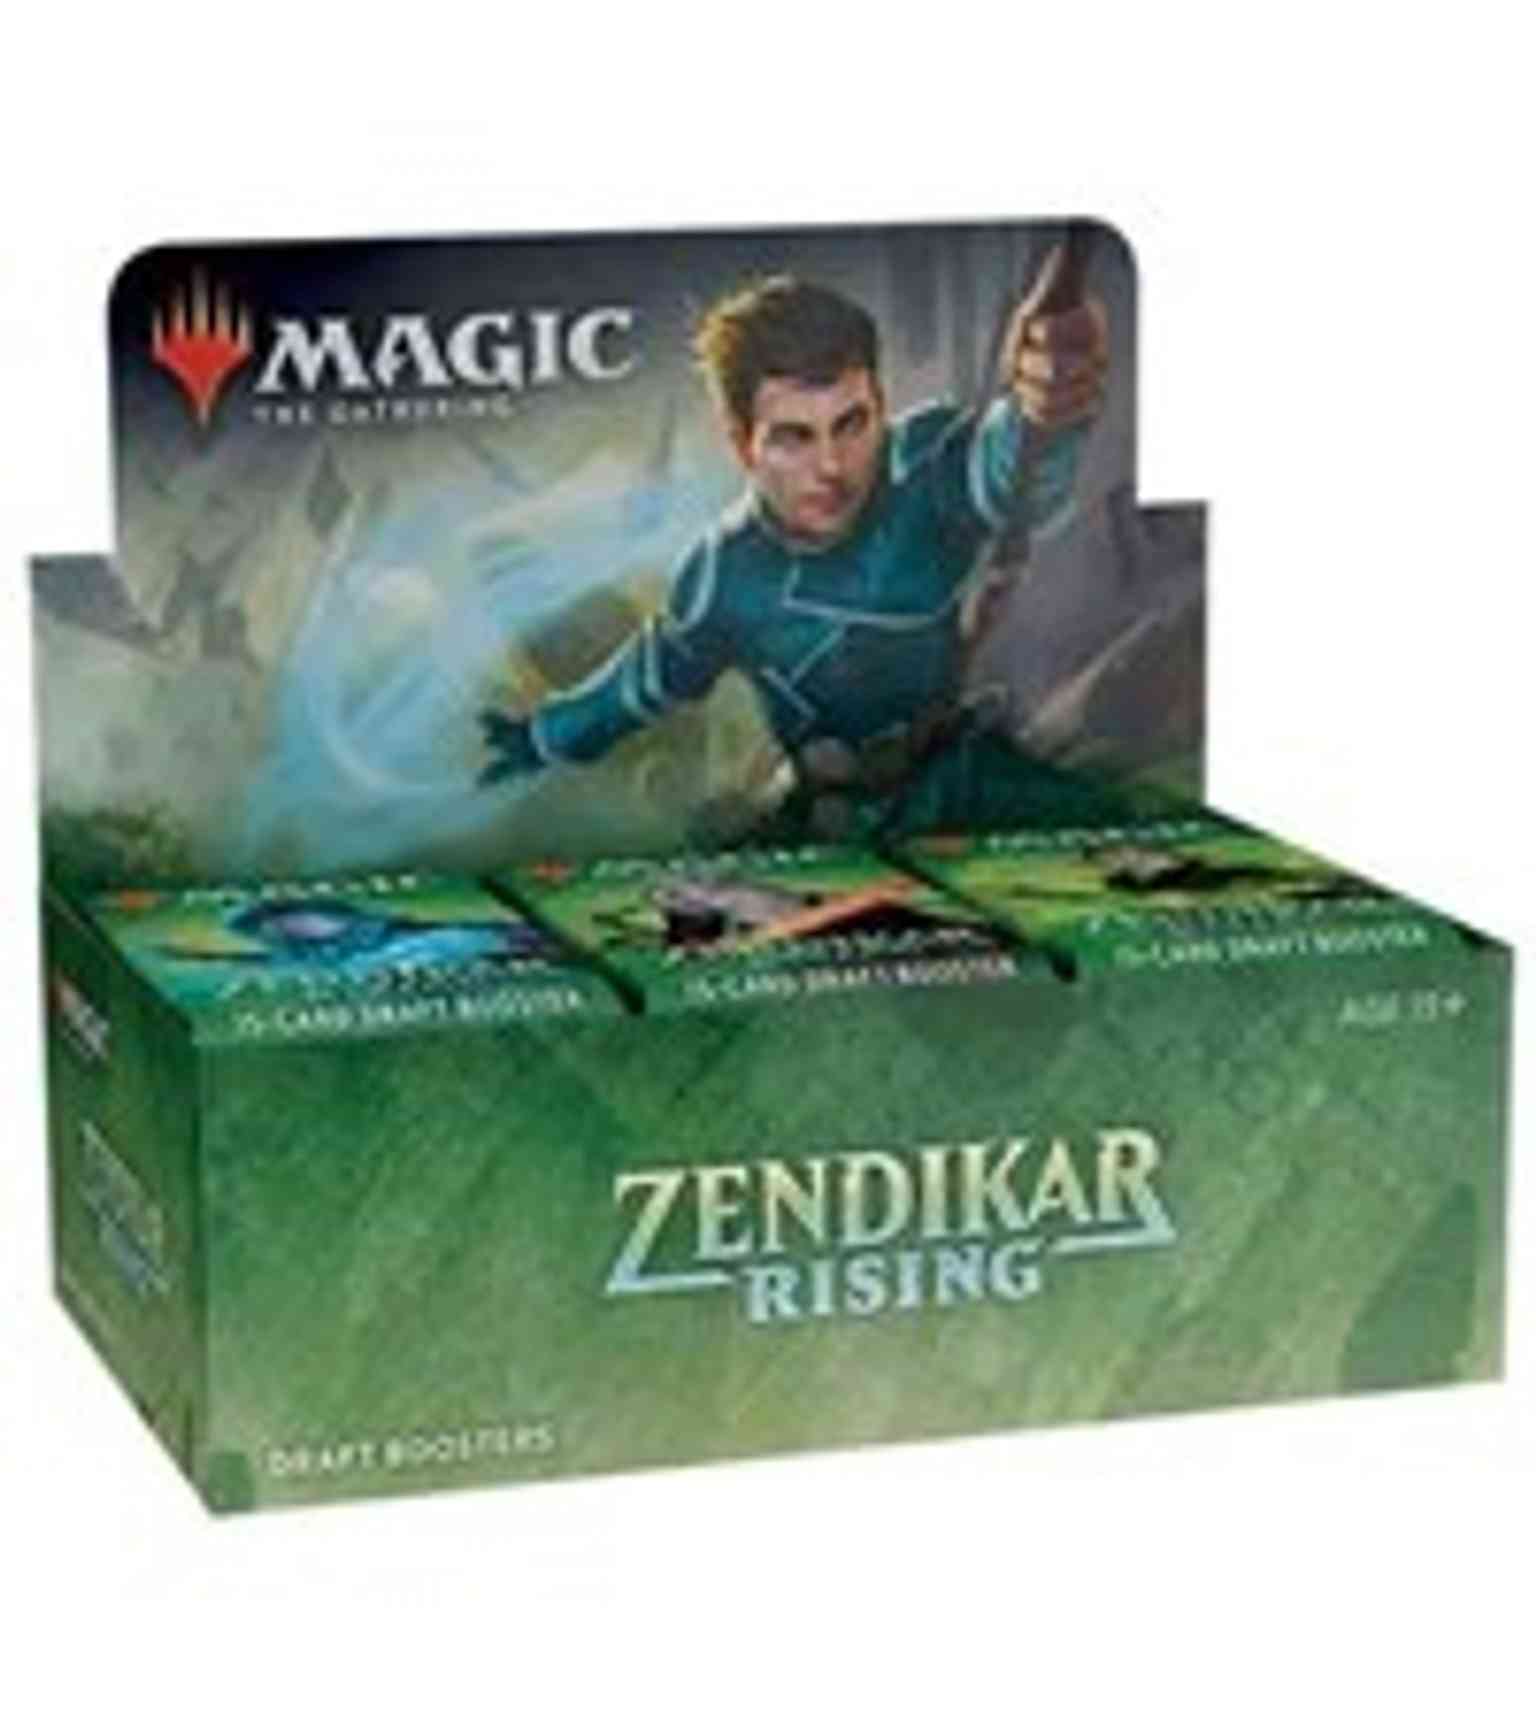 Zendikar Rising - Draft Booster Box magic card front